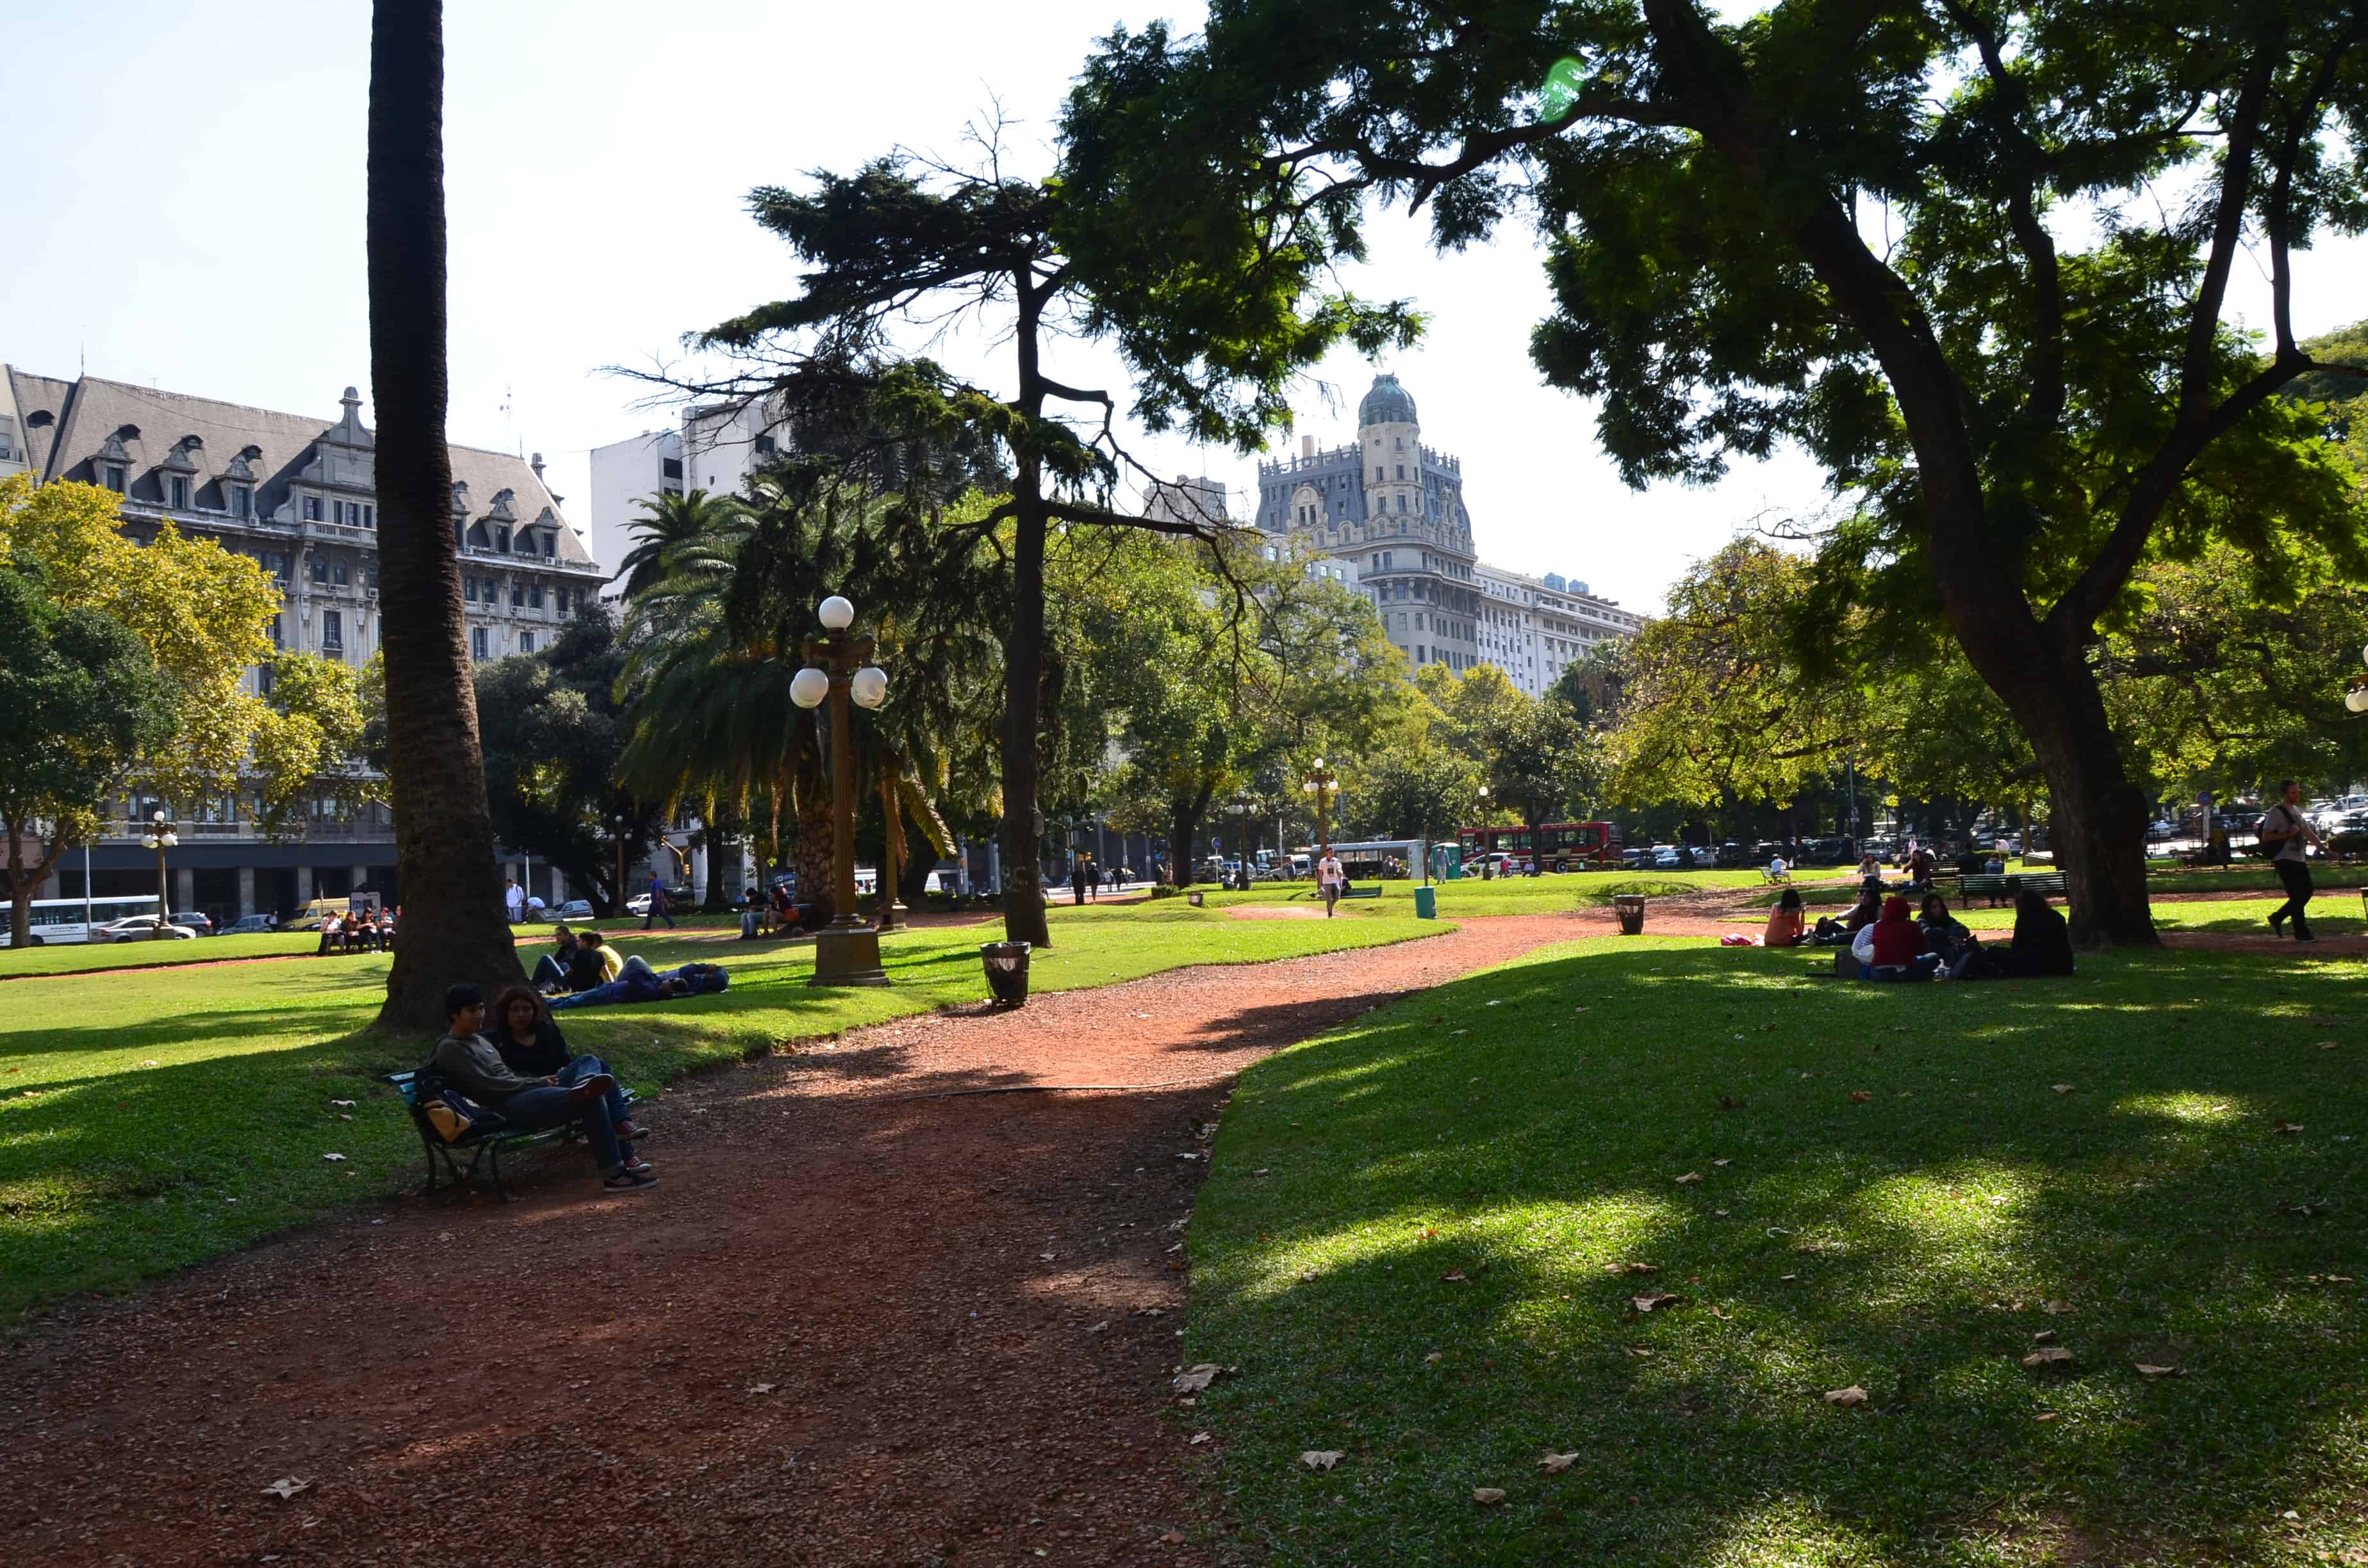 Plaza General Agustín Pedro Justo in Barrio Monserrat, Buenos Aires, Argentina